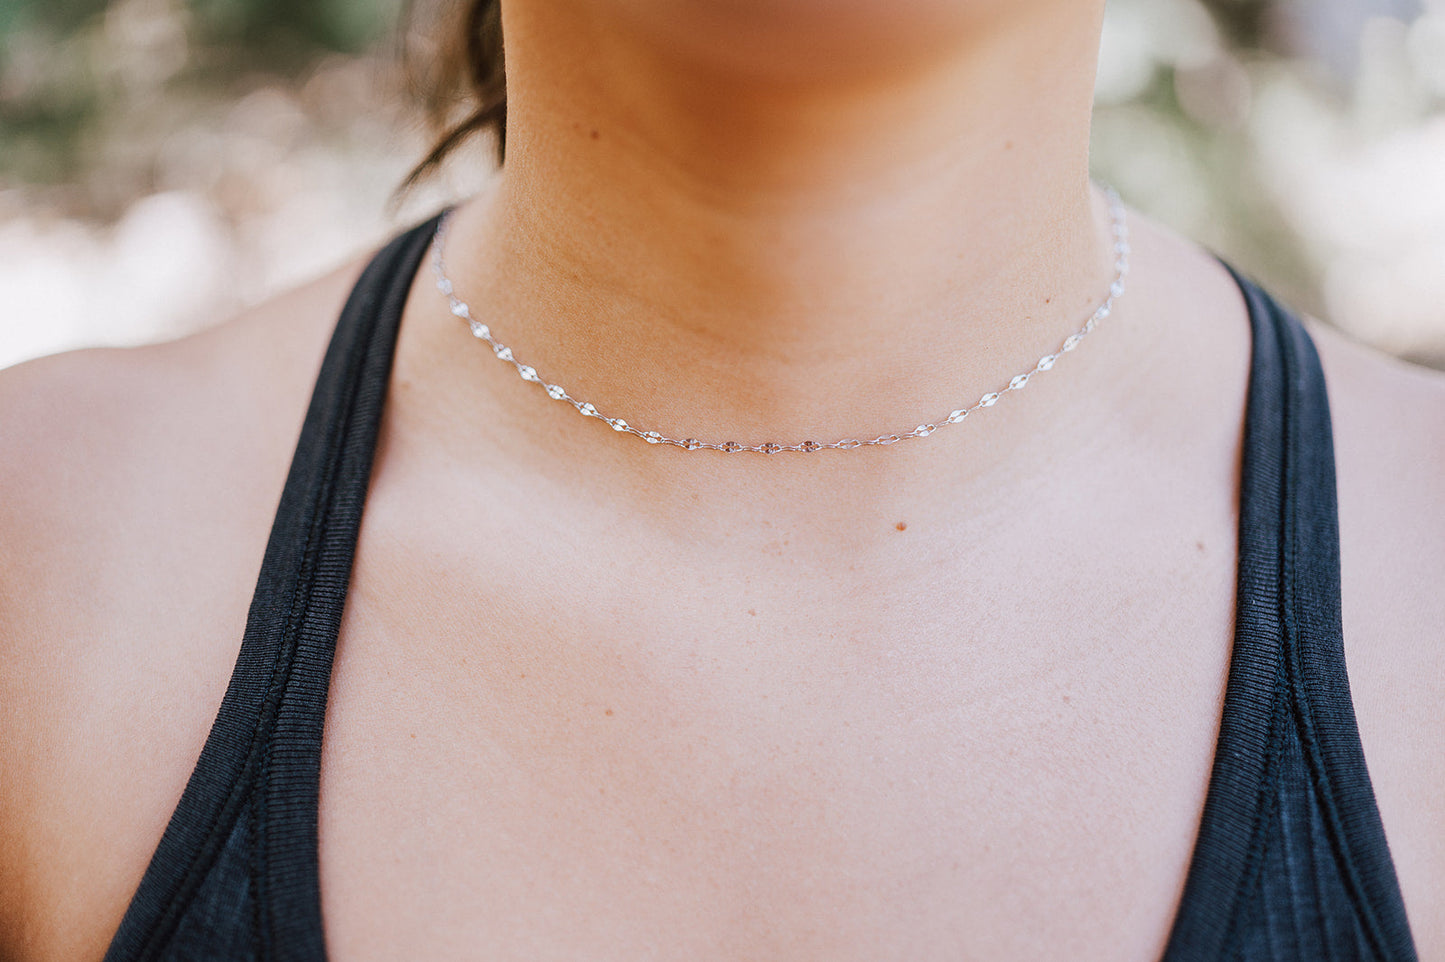 Shimmer Necklace